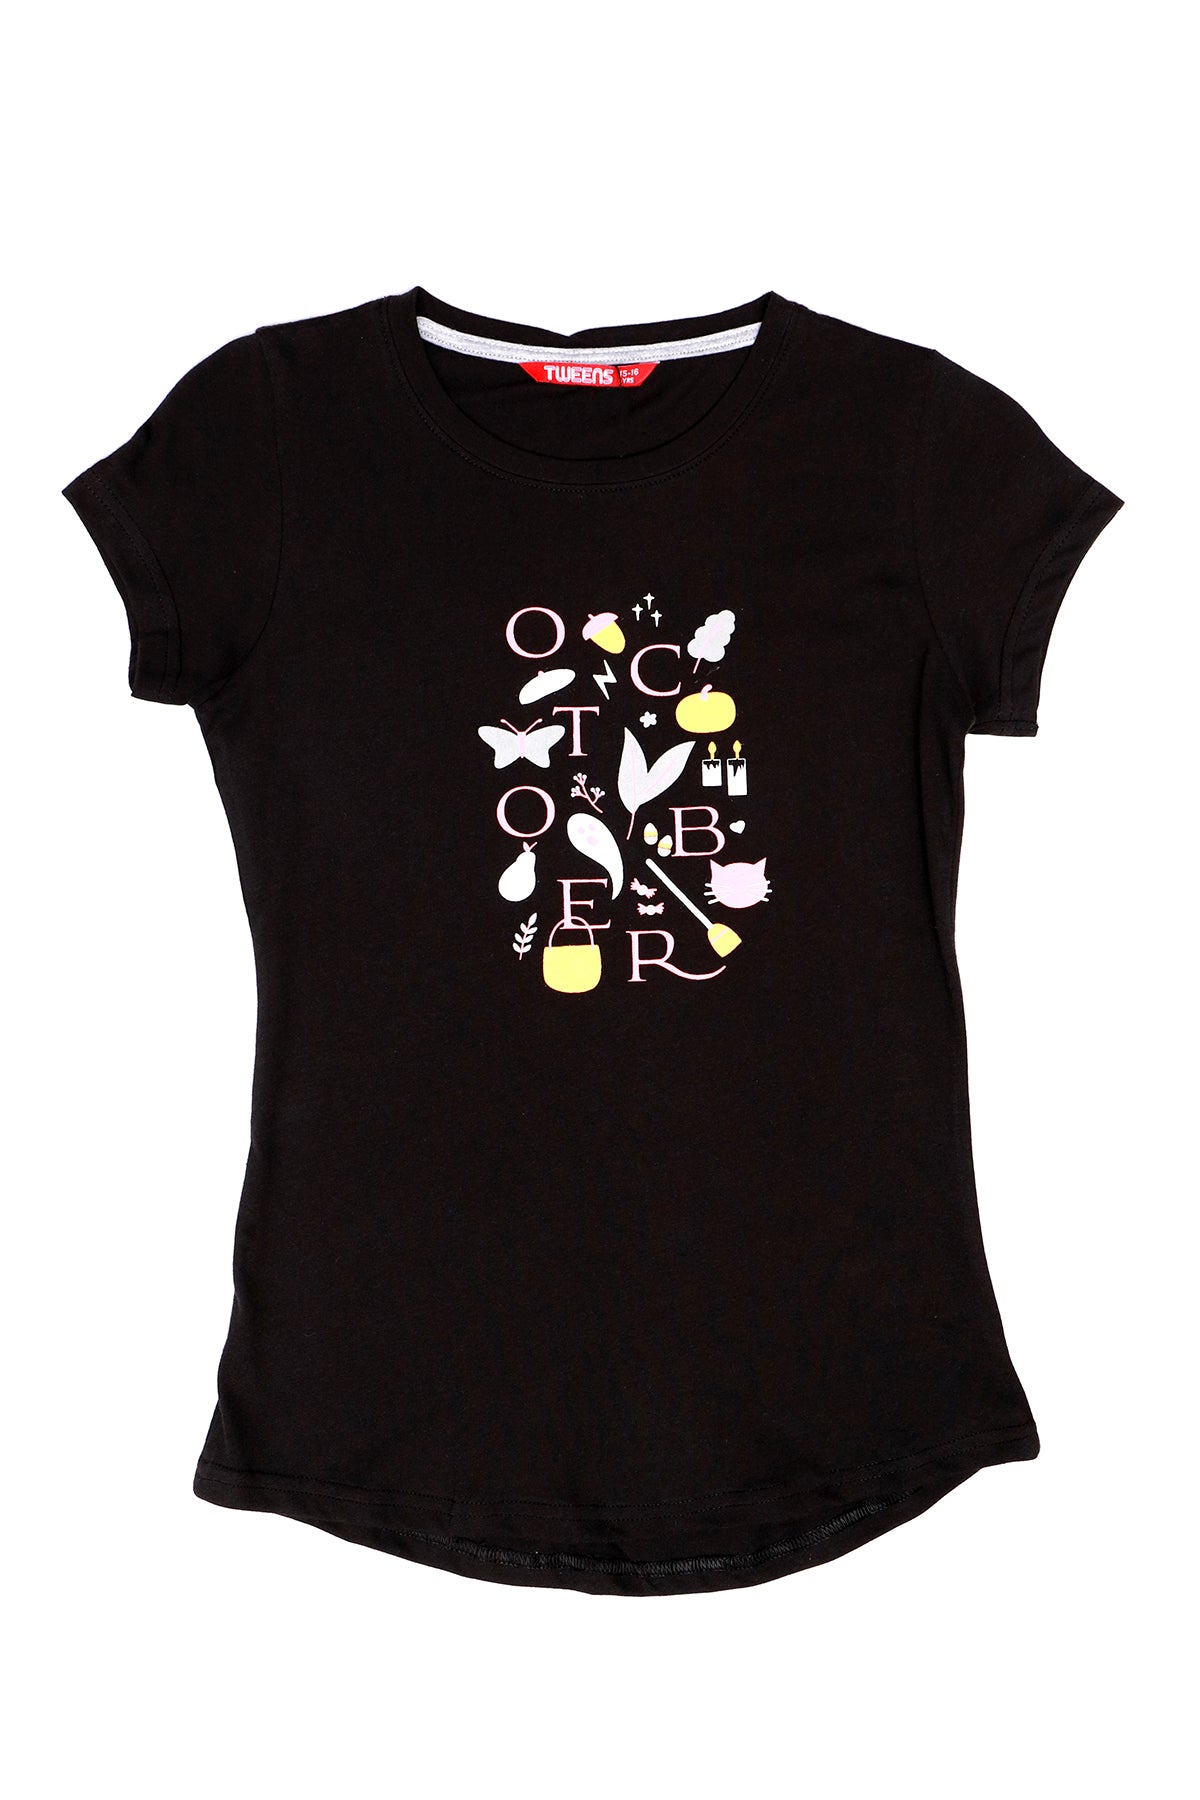 Tween Kids Girl Casual T - Shirt (7915058364640)